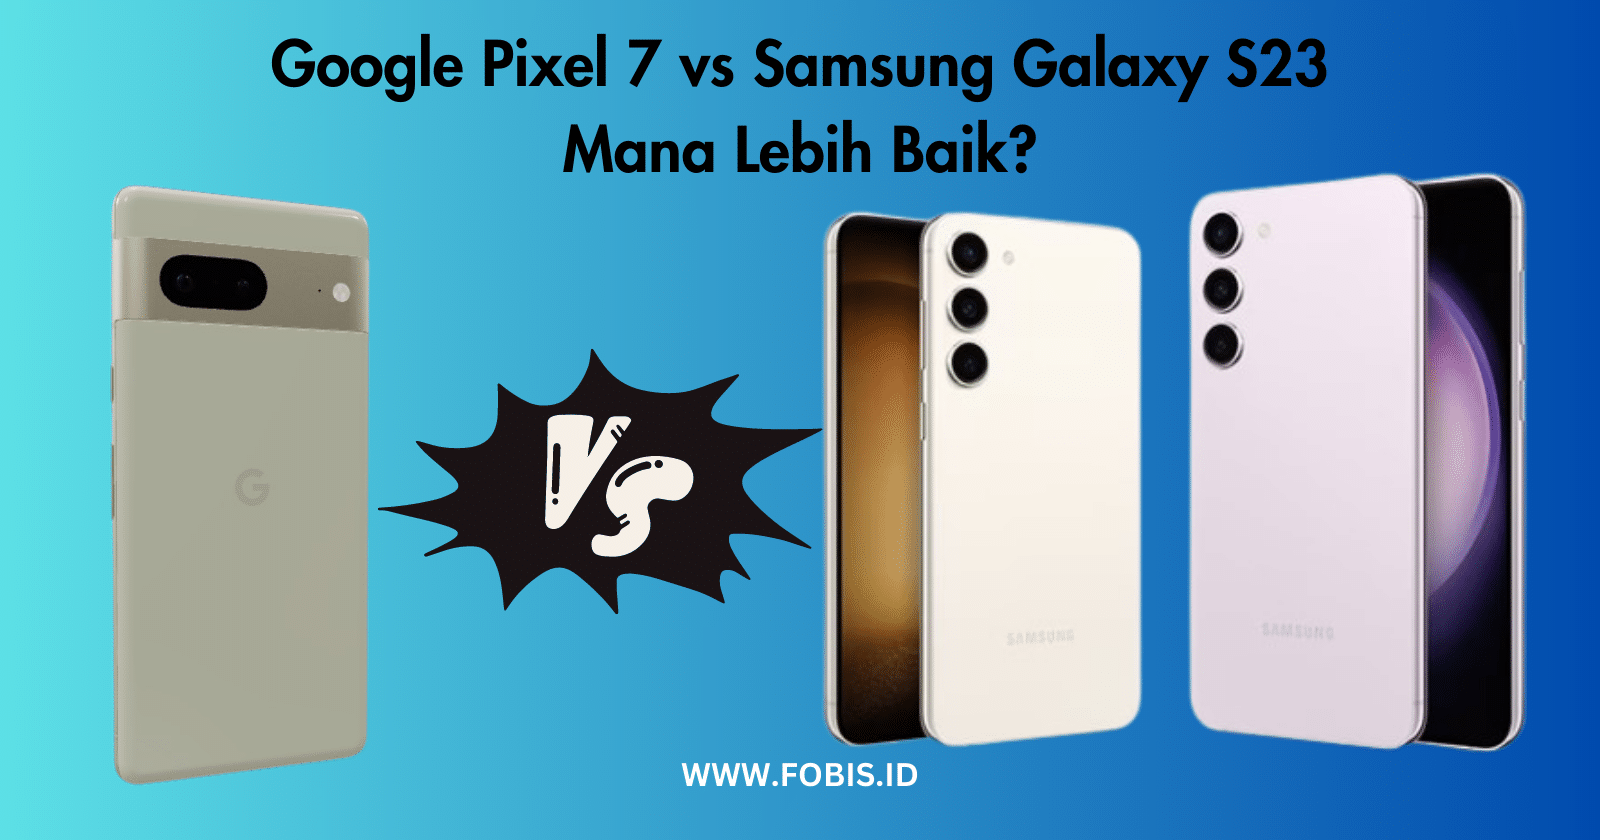 Google Pixel 7 vs Samsung Galaxy S23